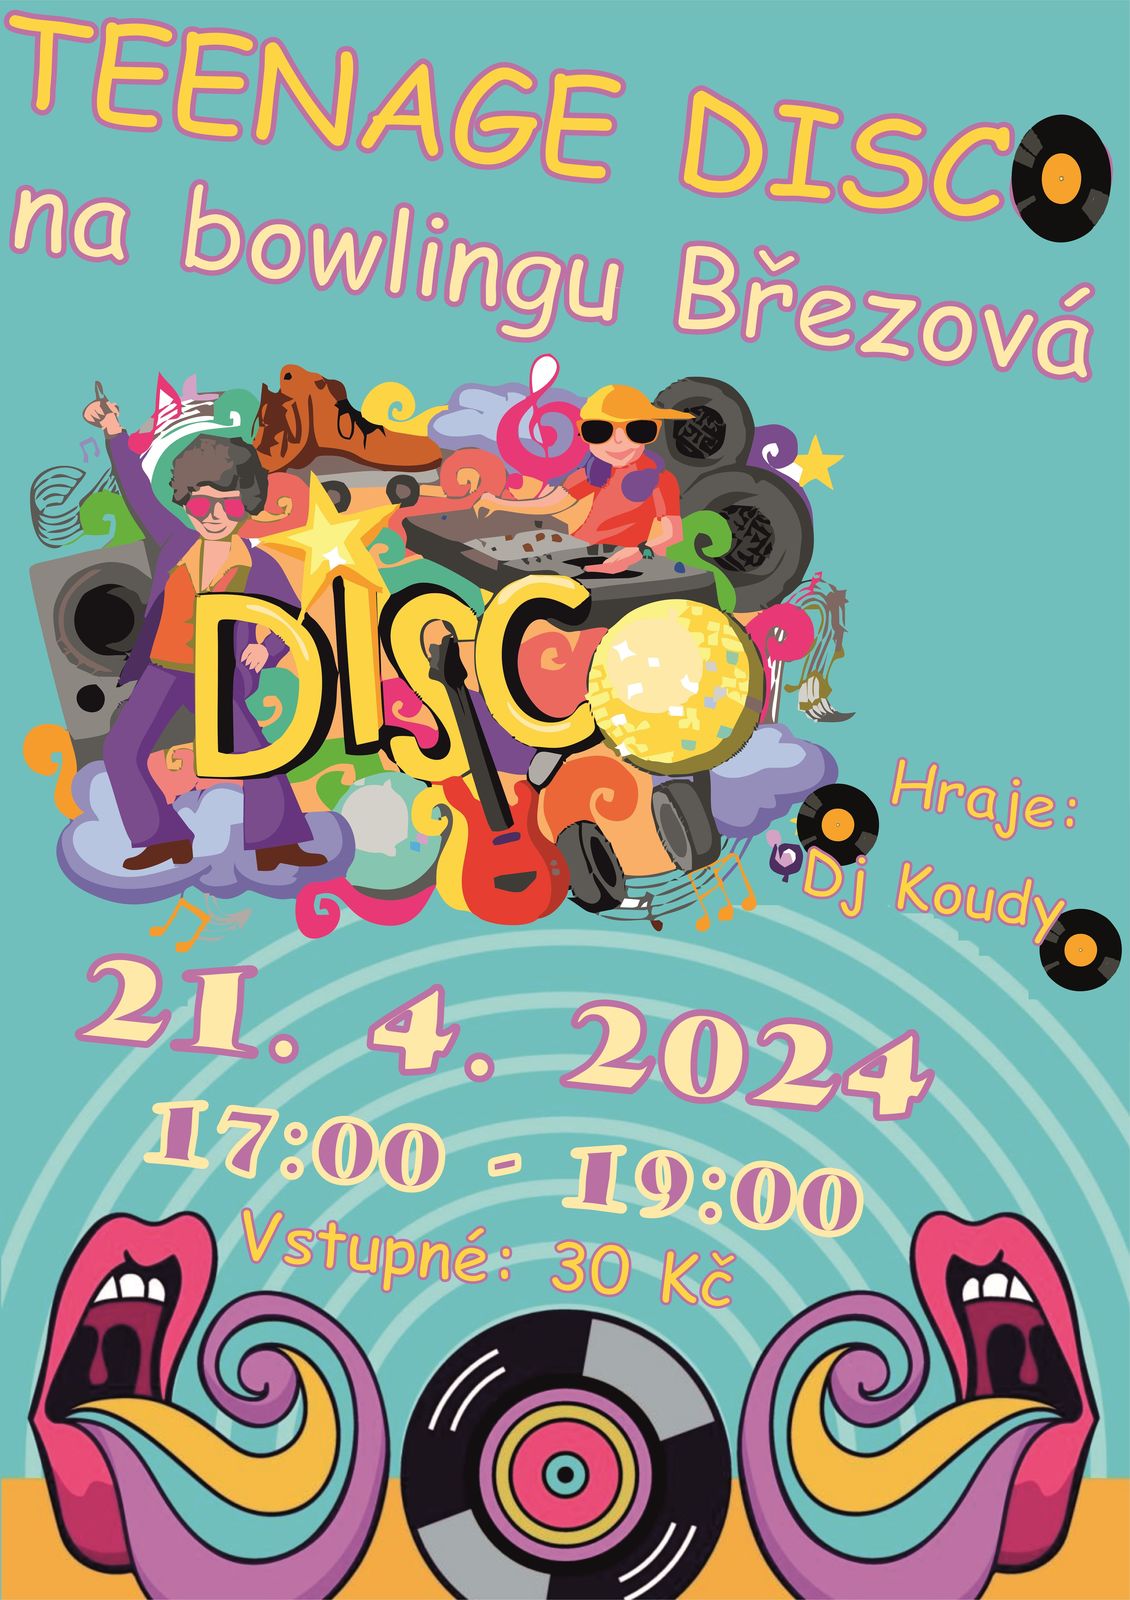 disco bowling (002).jpg